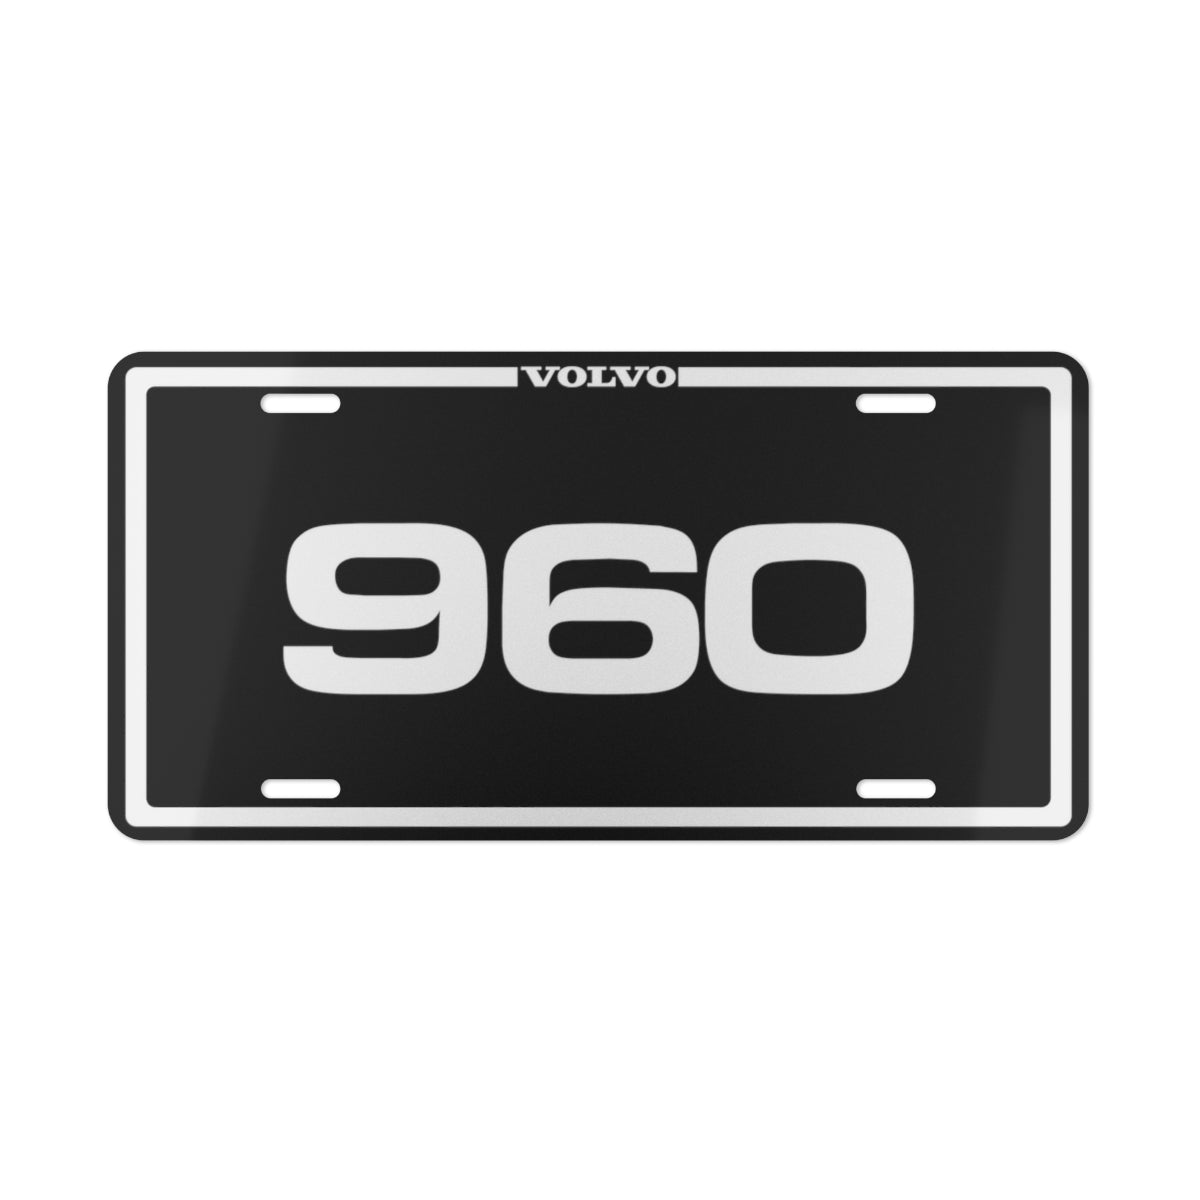 960 Showroom Plate